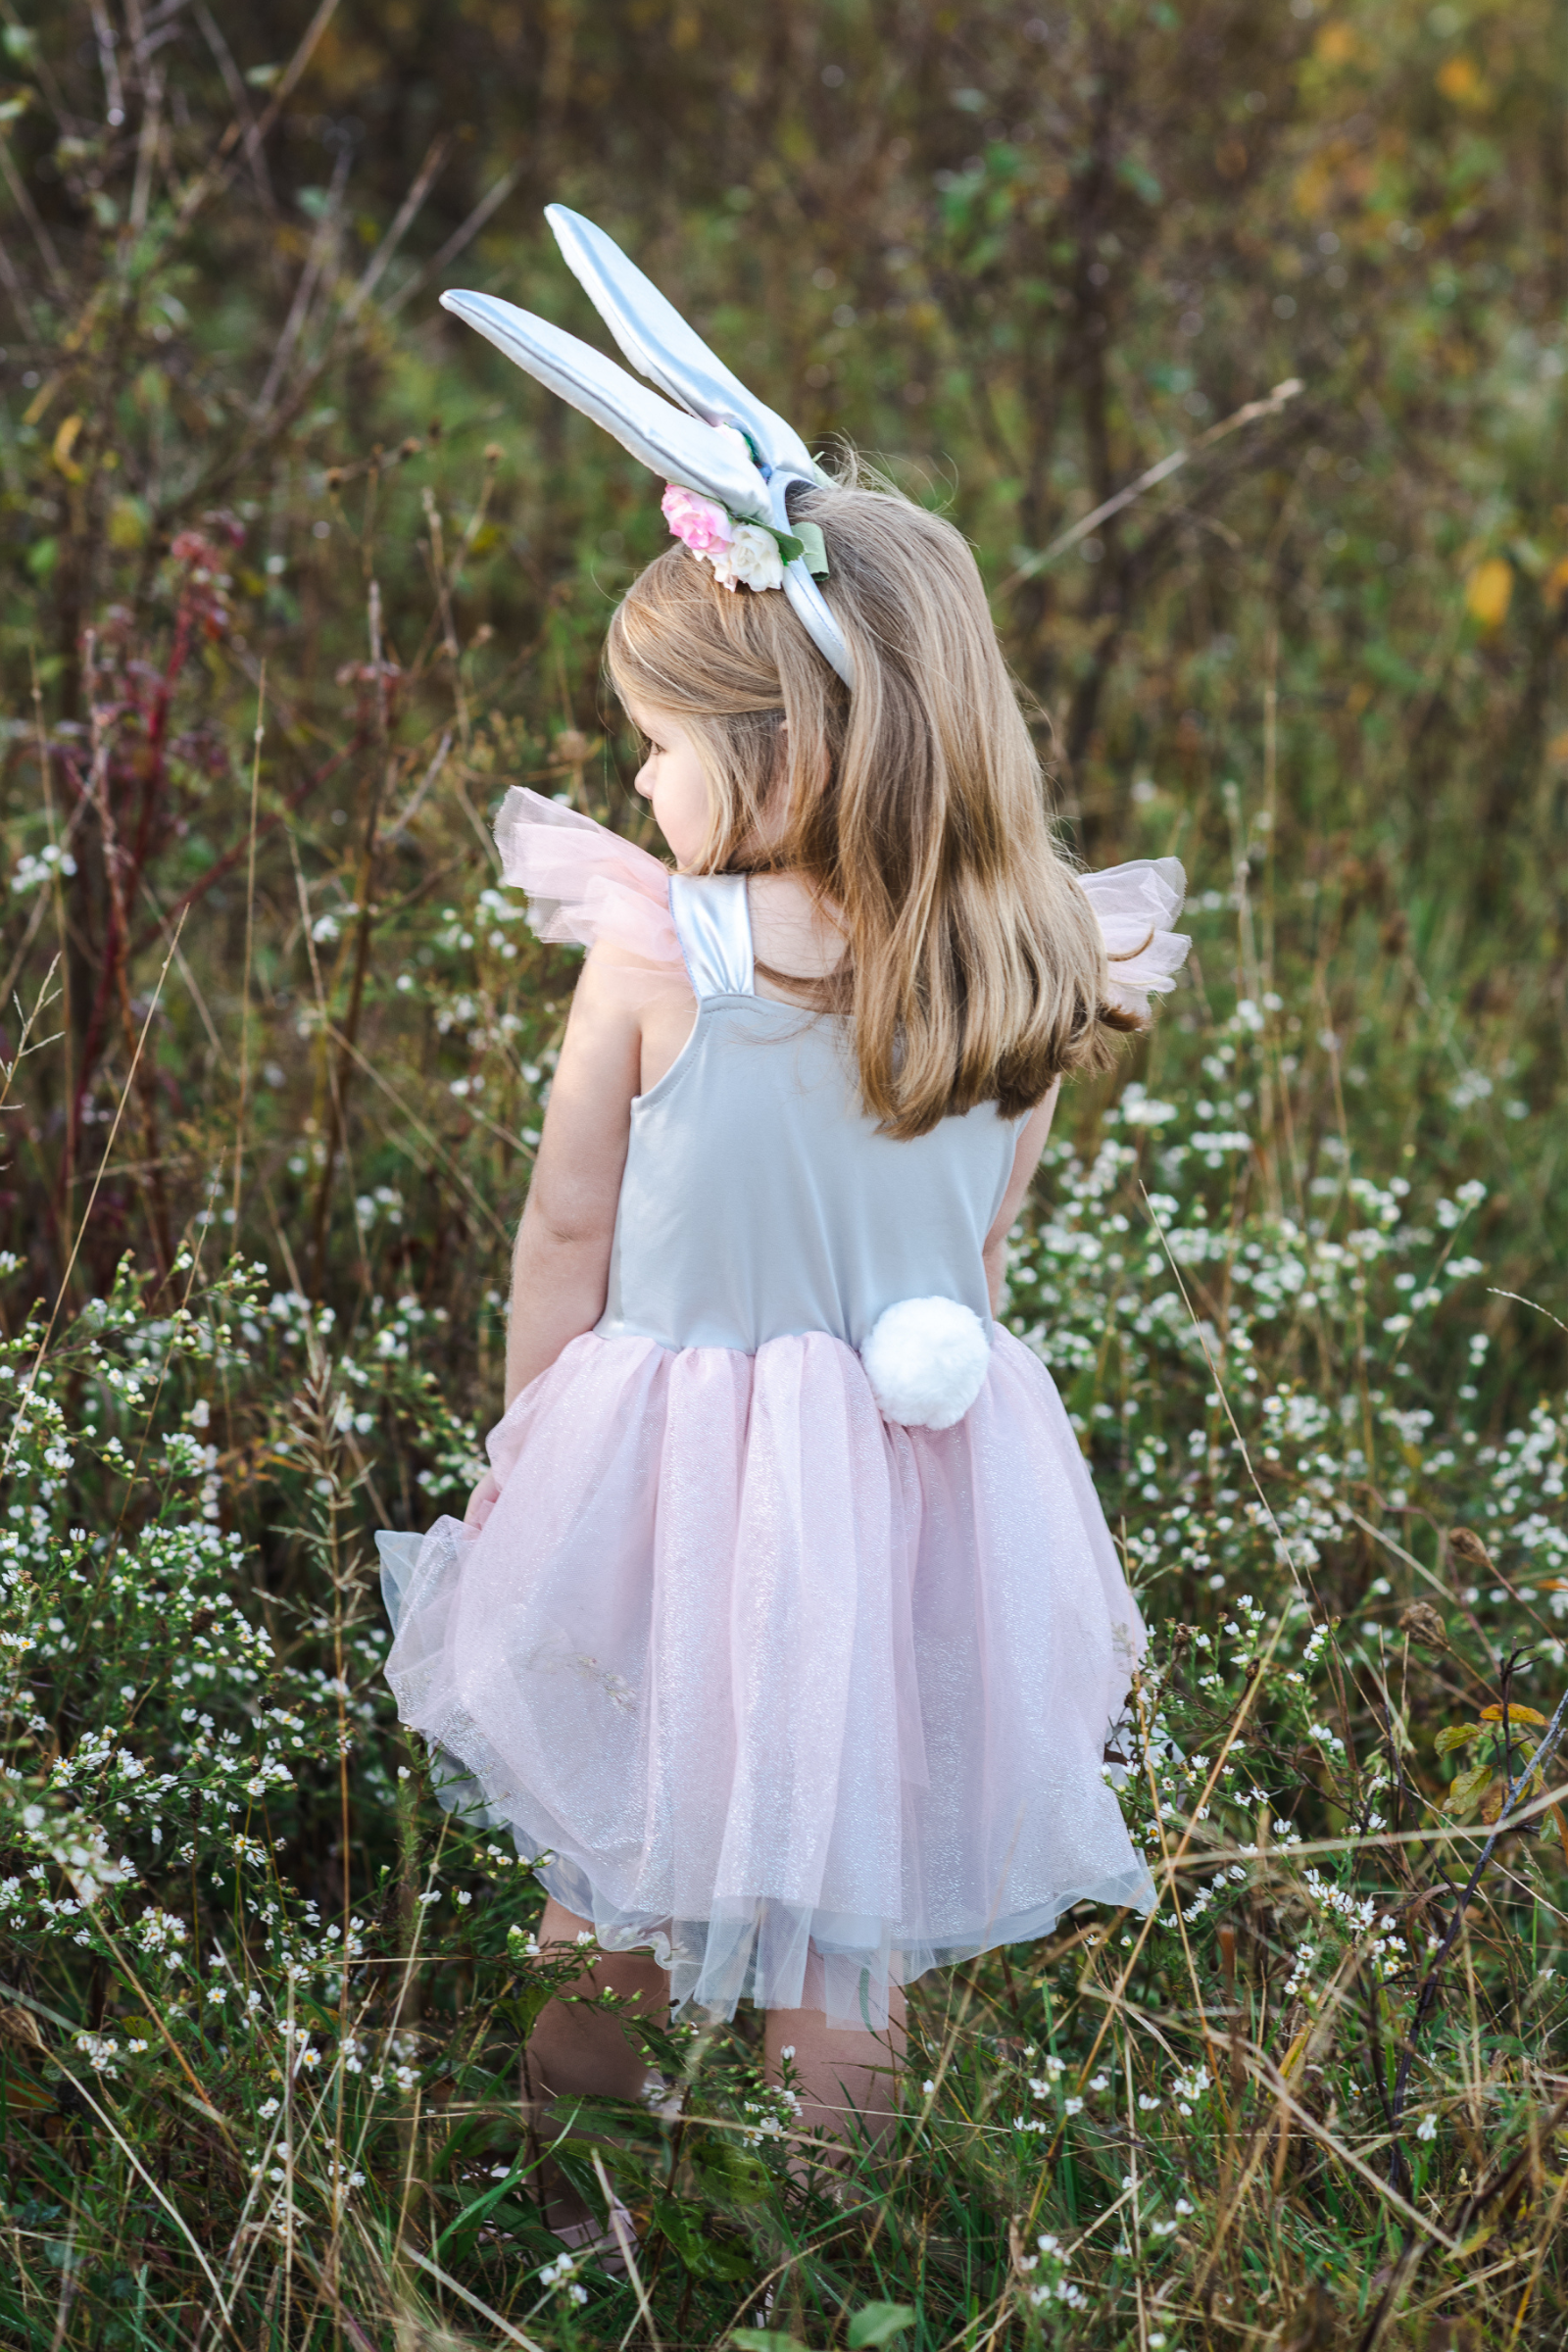 bunny little girl costume